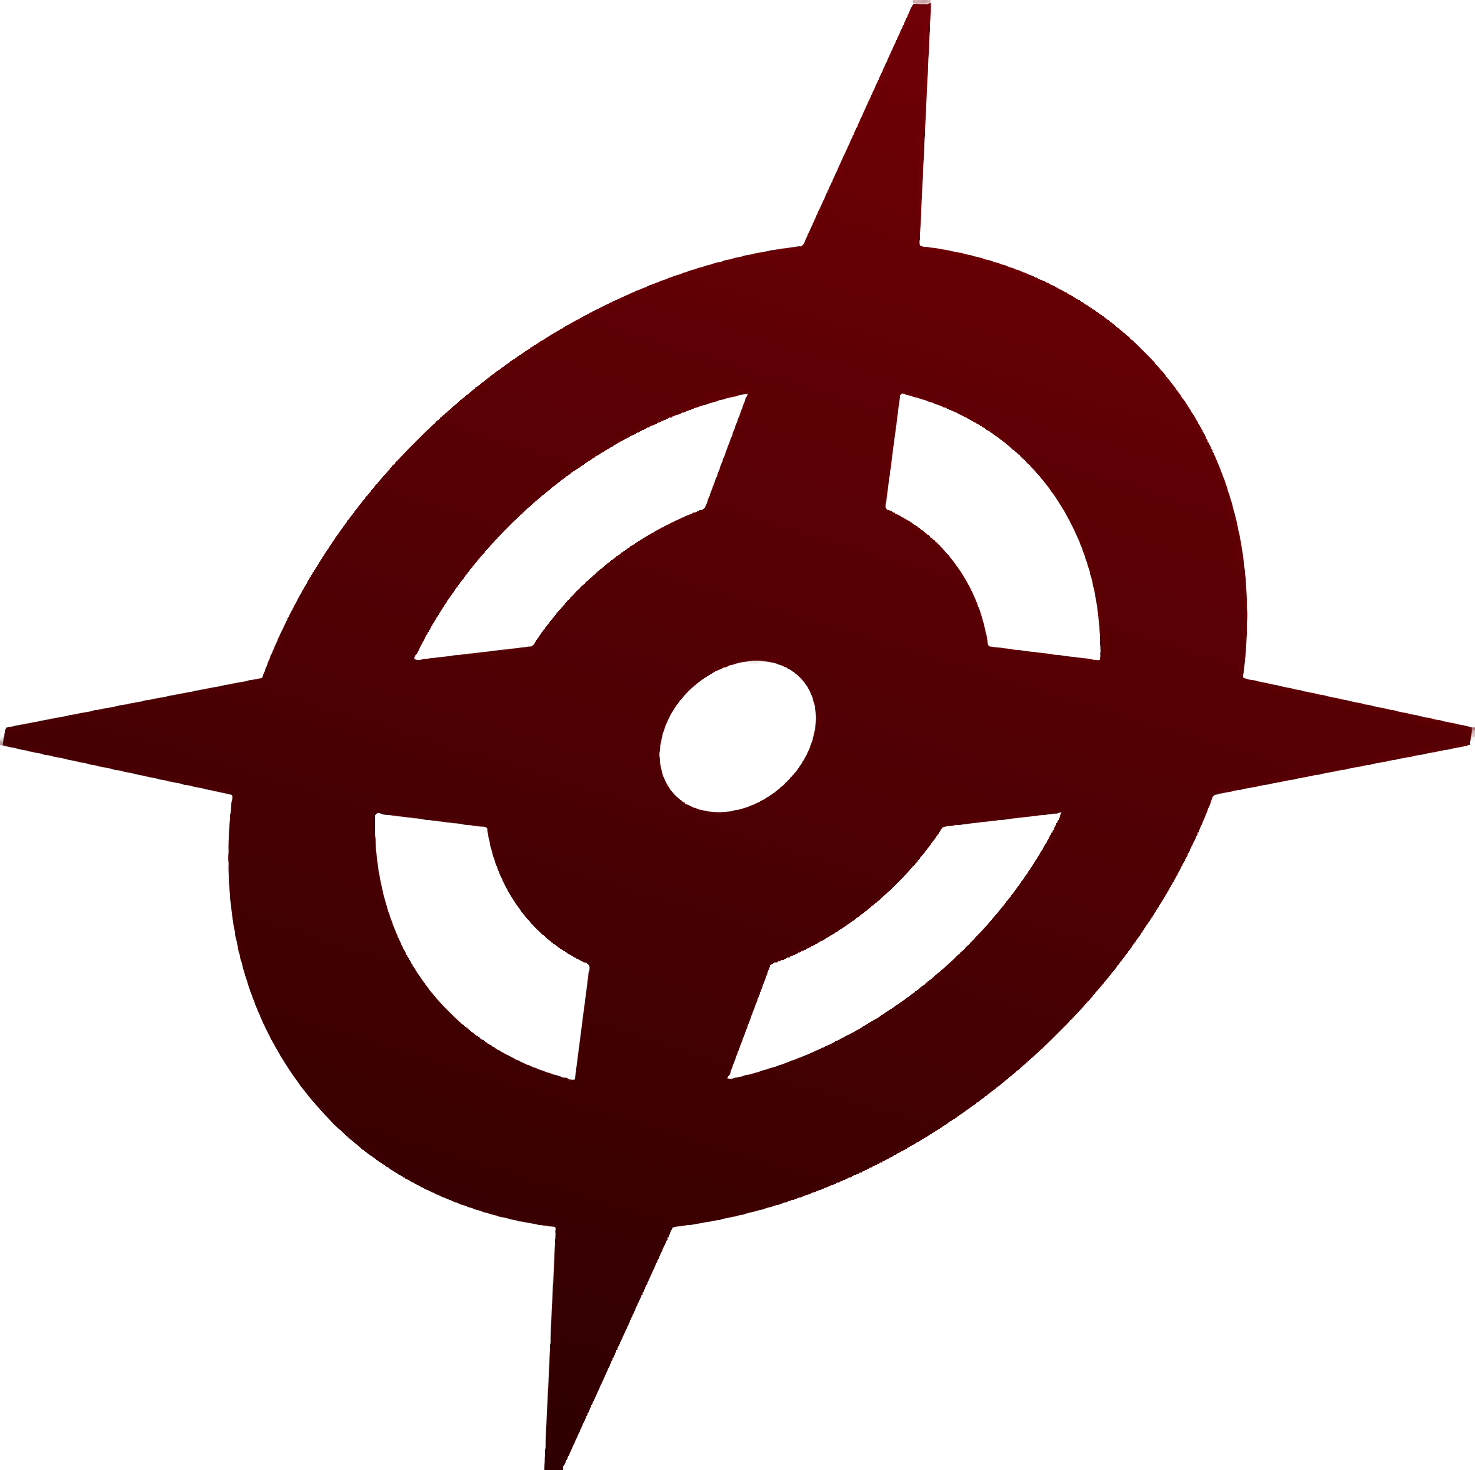 fire emblem awakening royal symbol